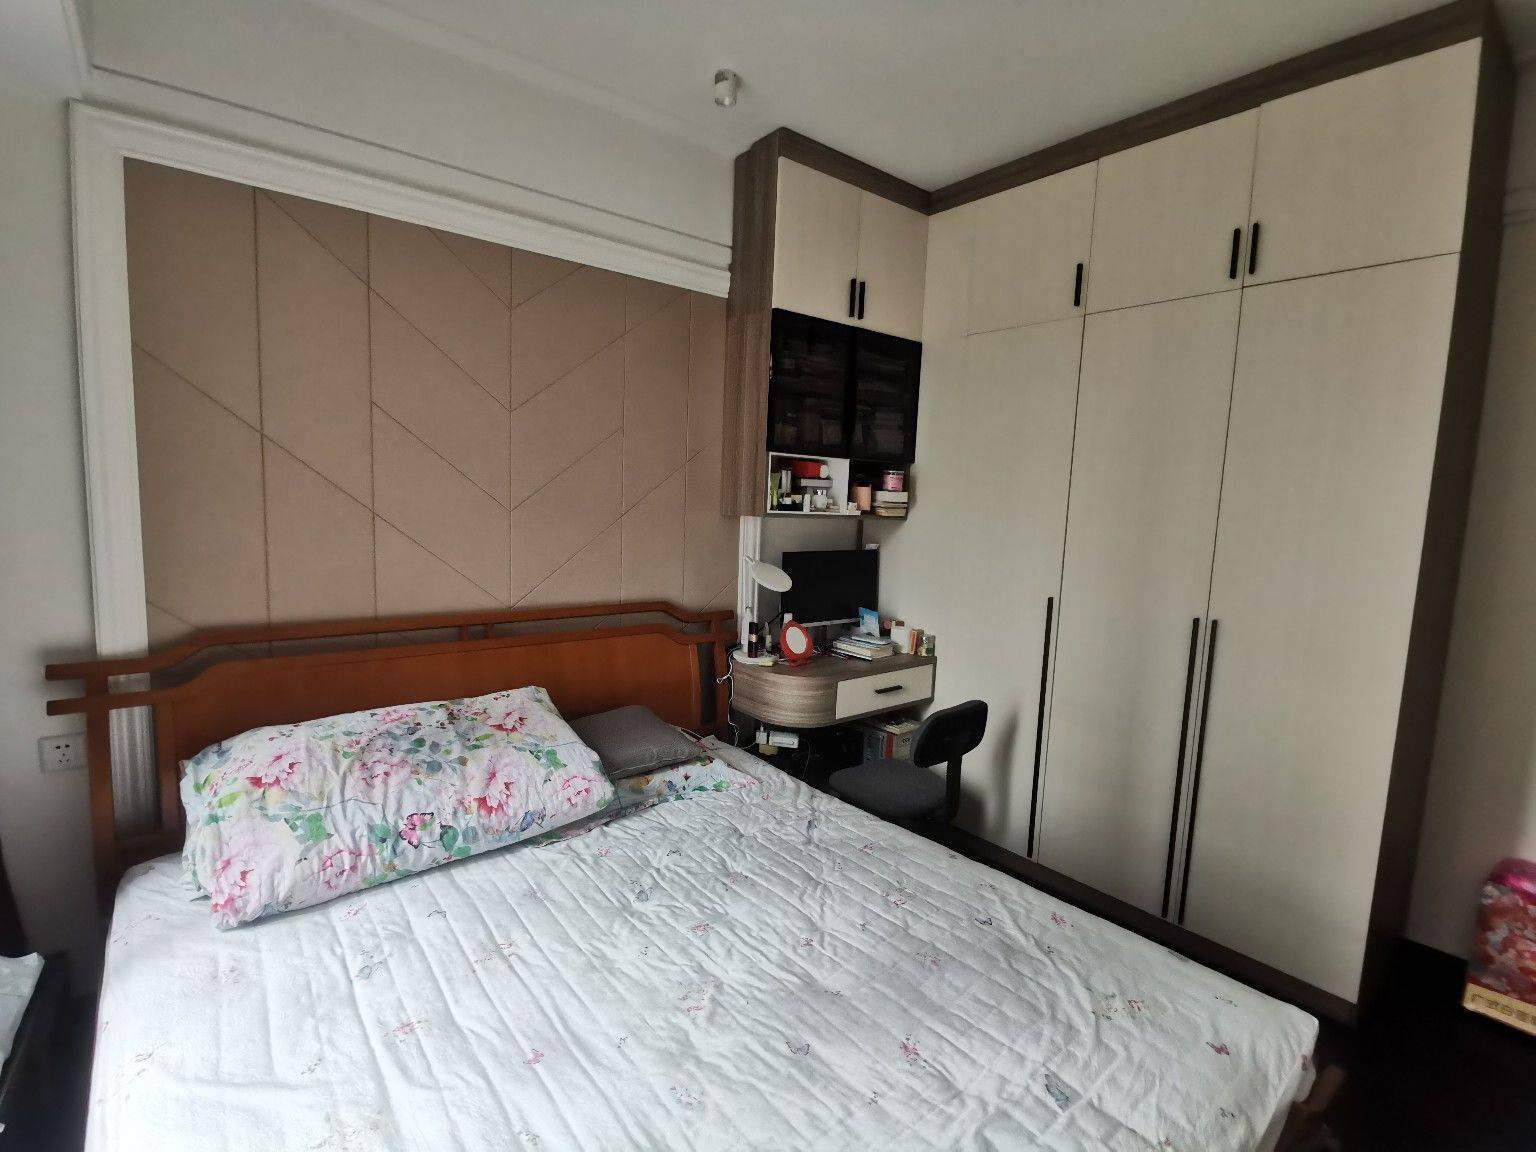 Guangzhou-Tianhe-Cozy Home,Clean&Comfy,No Gender Limit,Hustle & Bustle